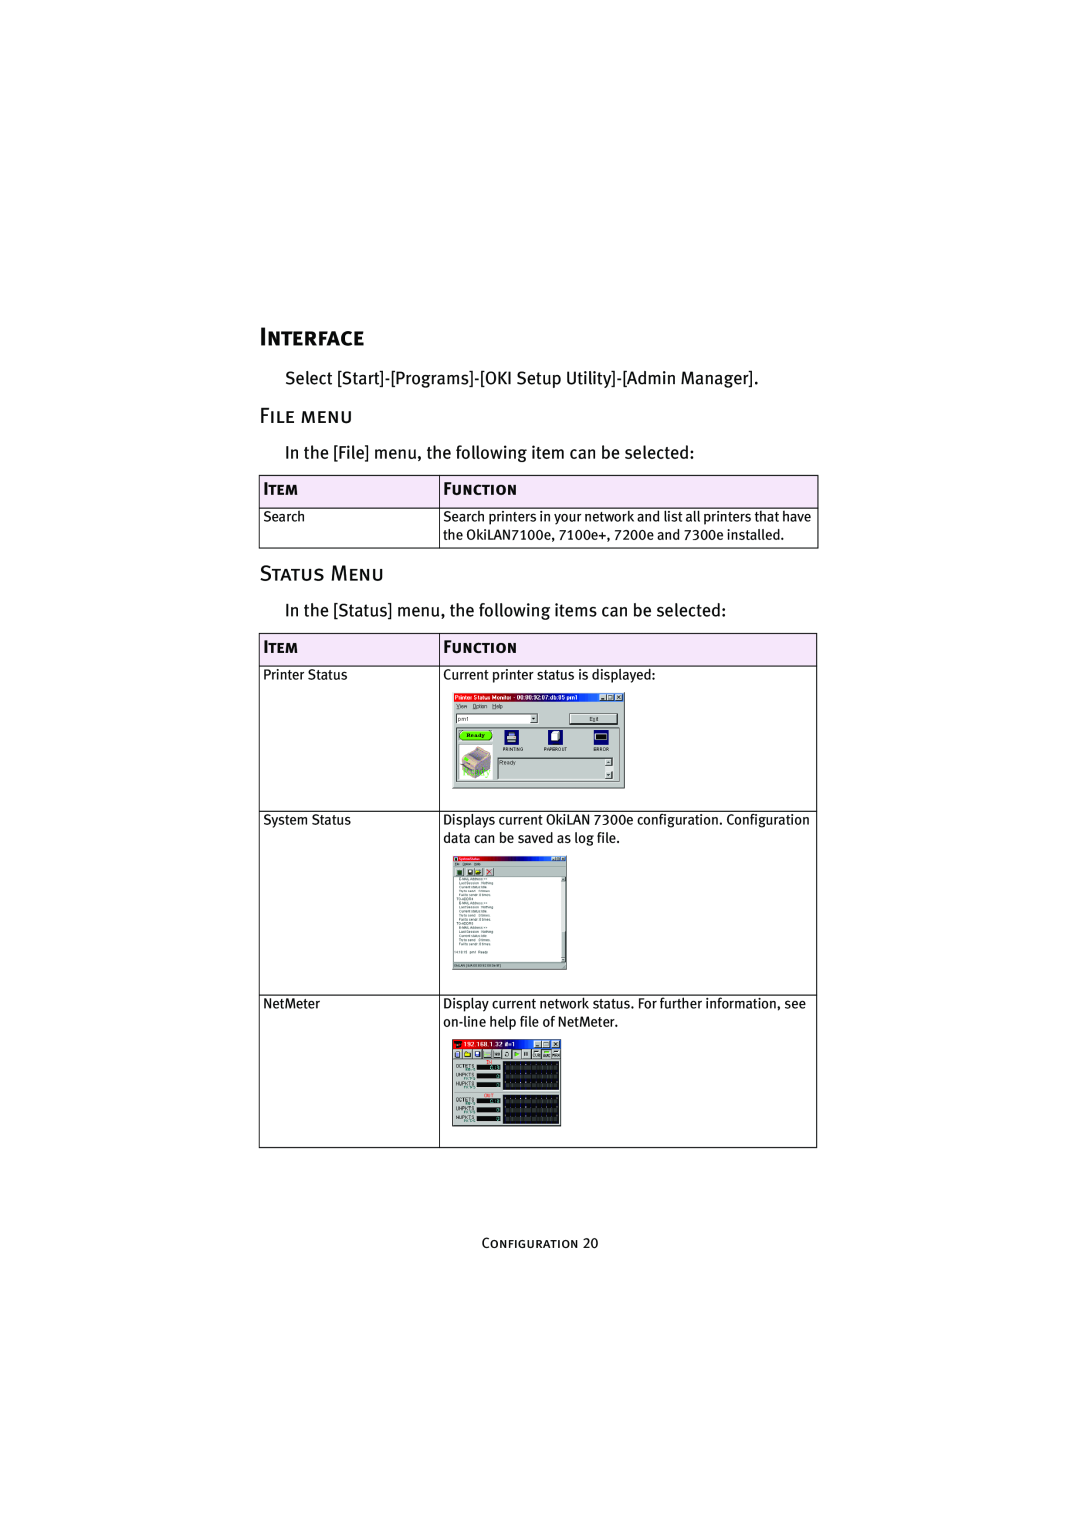 Oki 7300e manual Interface, File menu, Status Menu, Function 